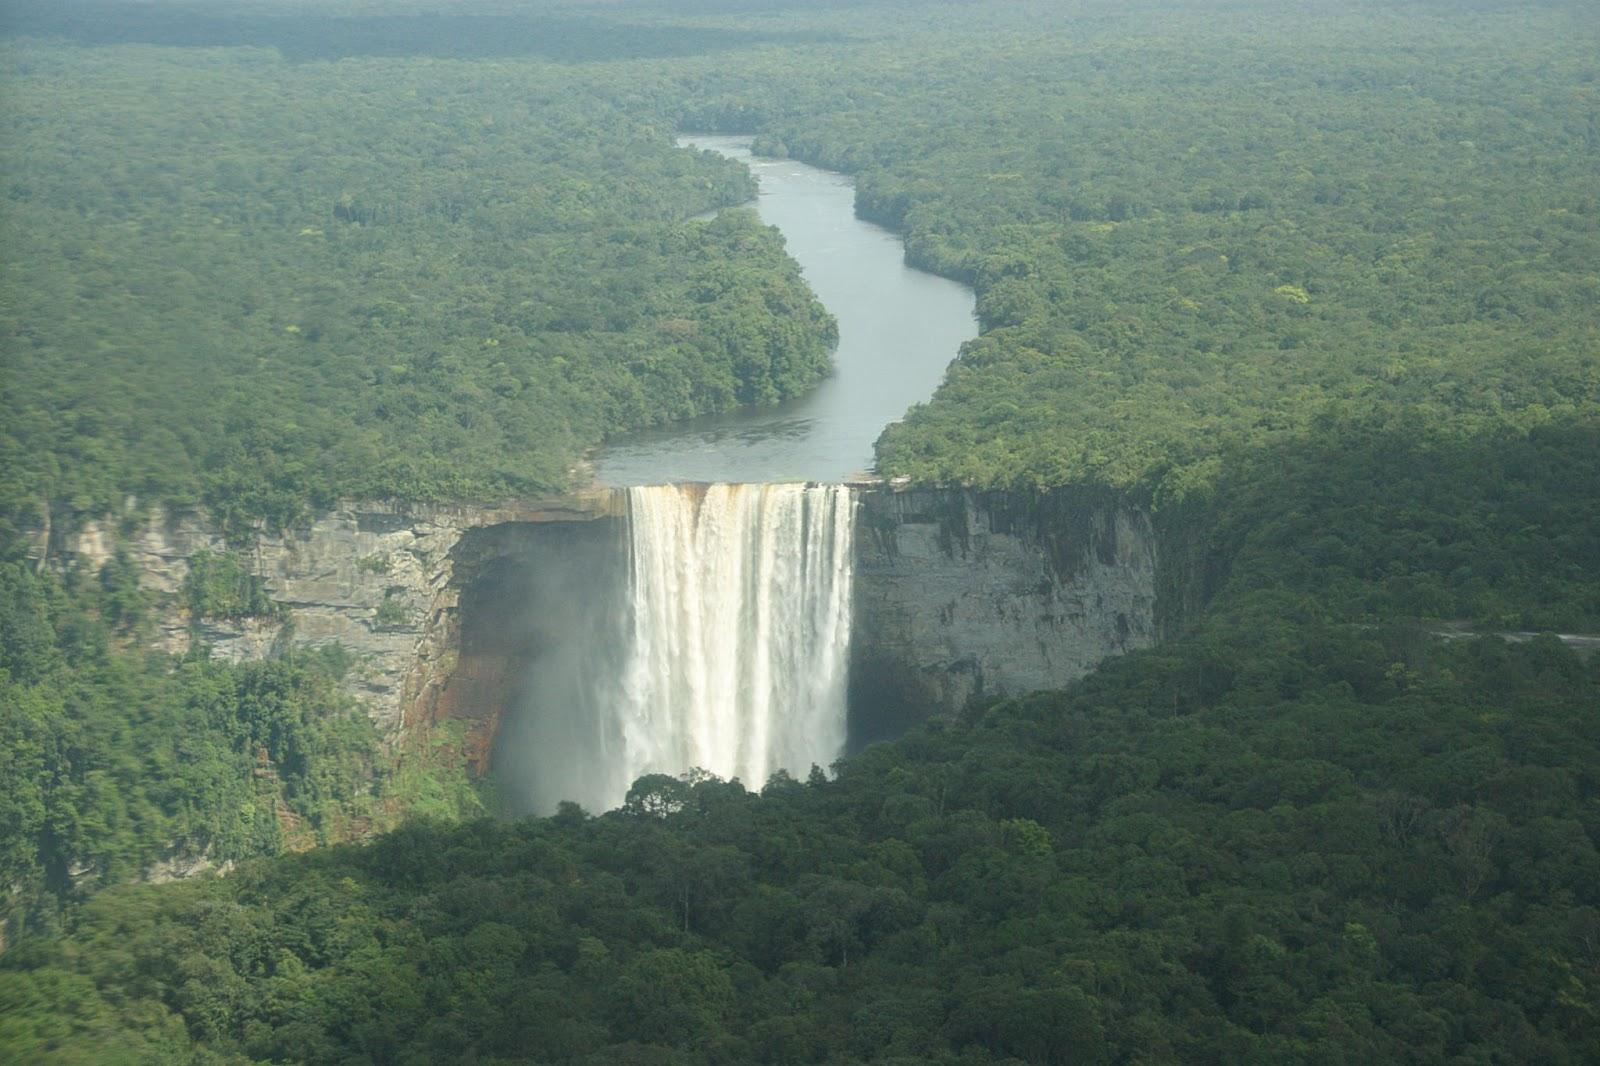 Celebrating Tourism Awareness Month in Guyana through visiting the beautiful Kaieteur Falls